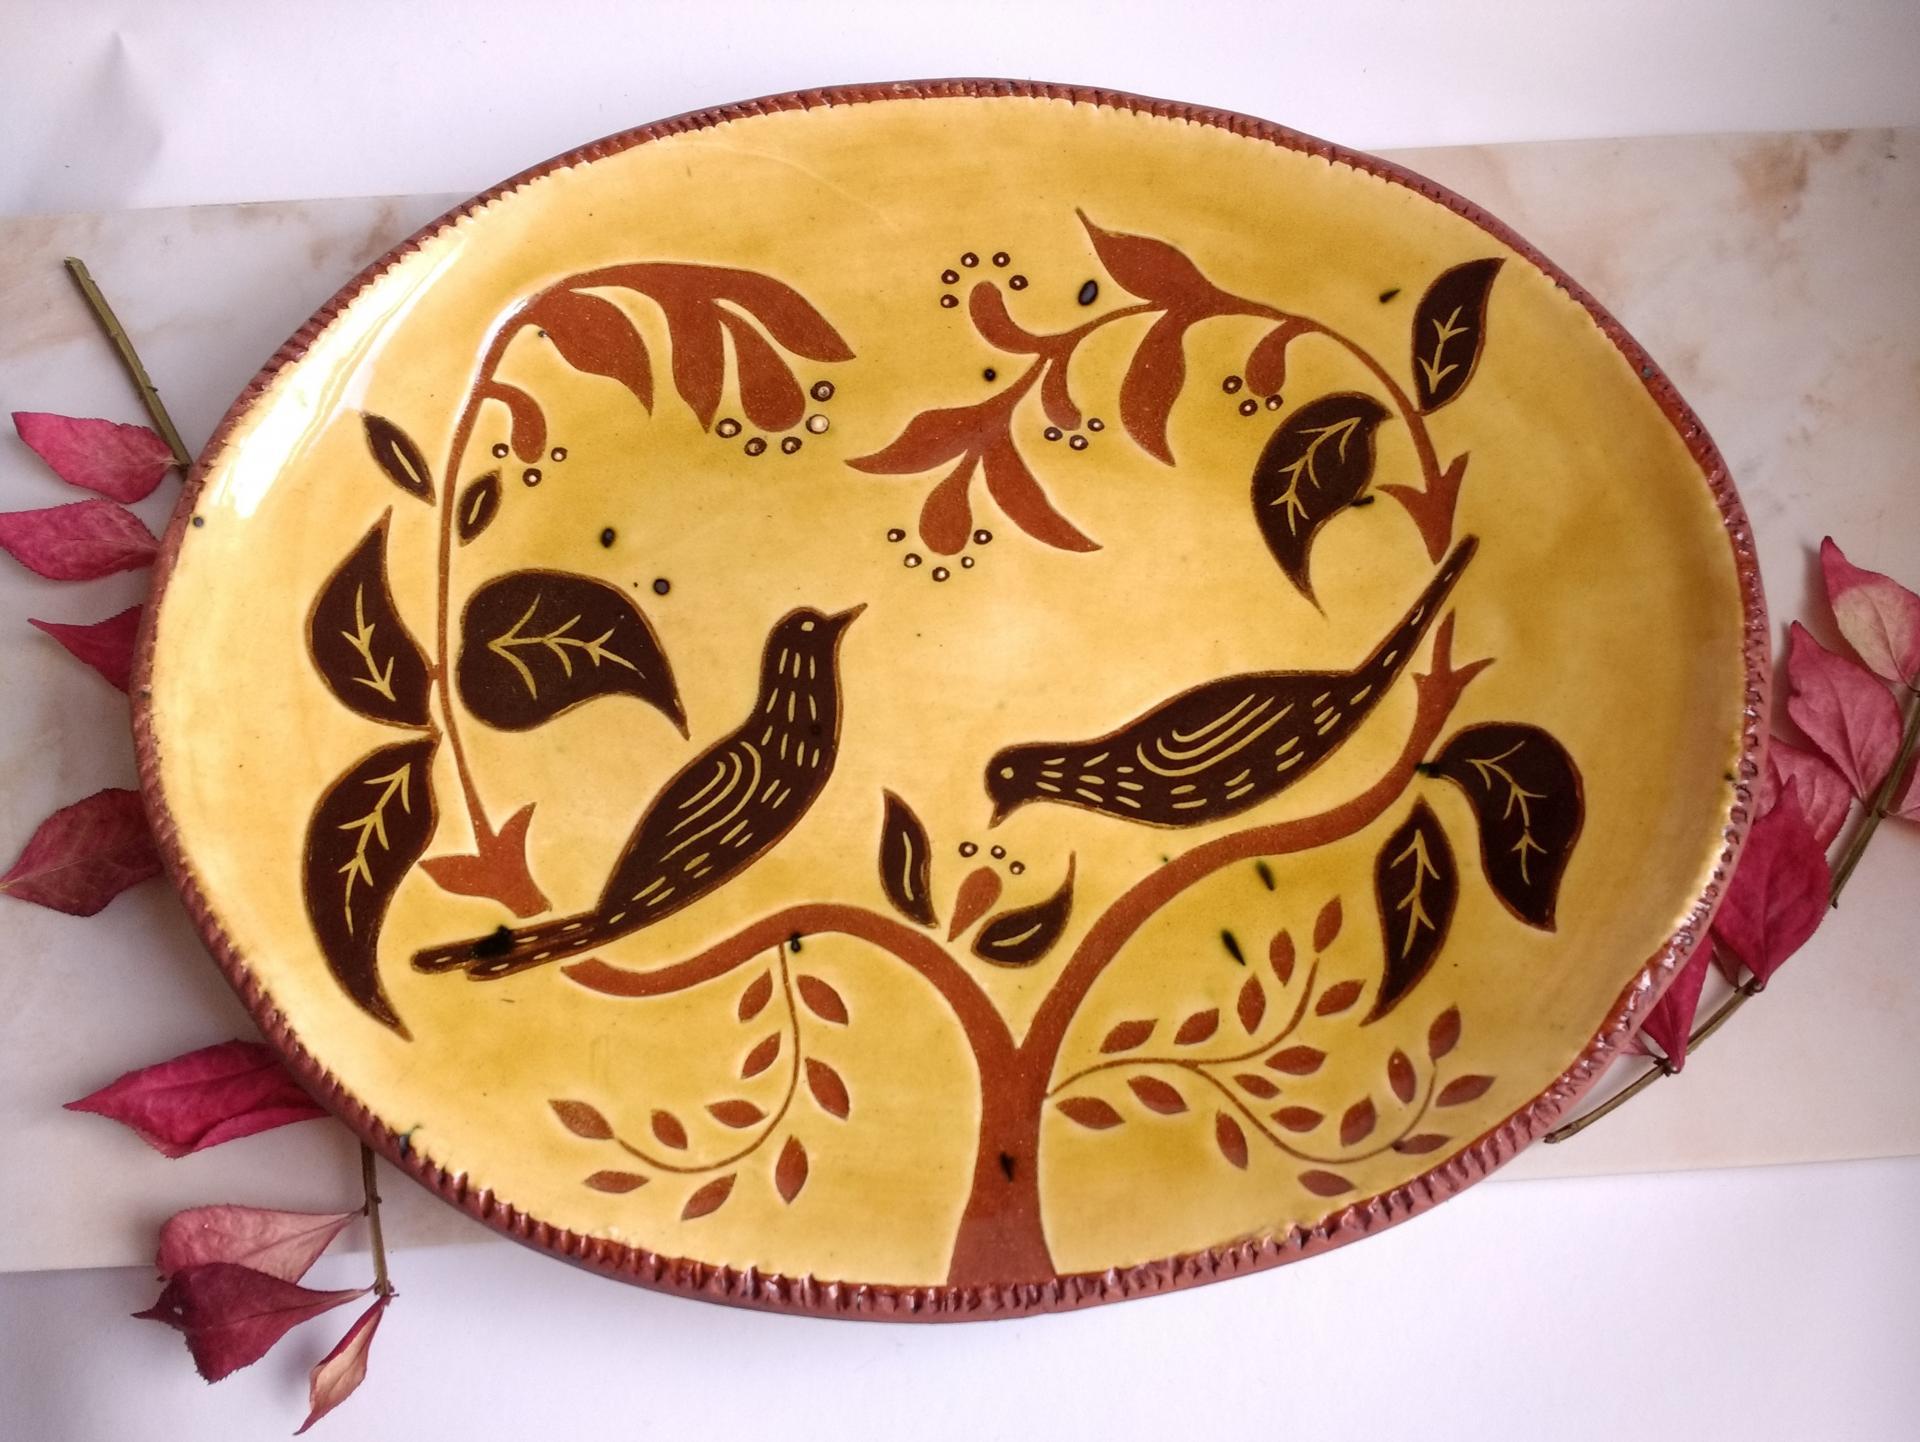 Made-to-Order Kulina Folk Art Redware Oval Platter with Bird Eating Berries  Sgraffito Decoration | Pied Potter Hamelin & Kulina Folk Art American  redware